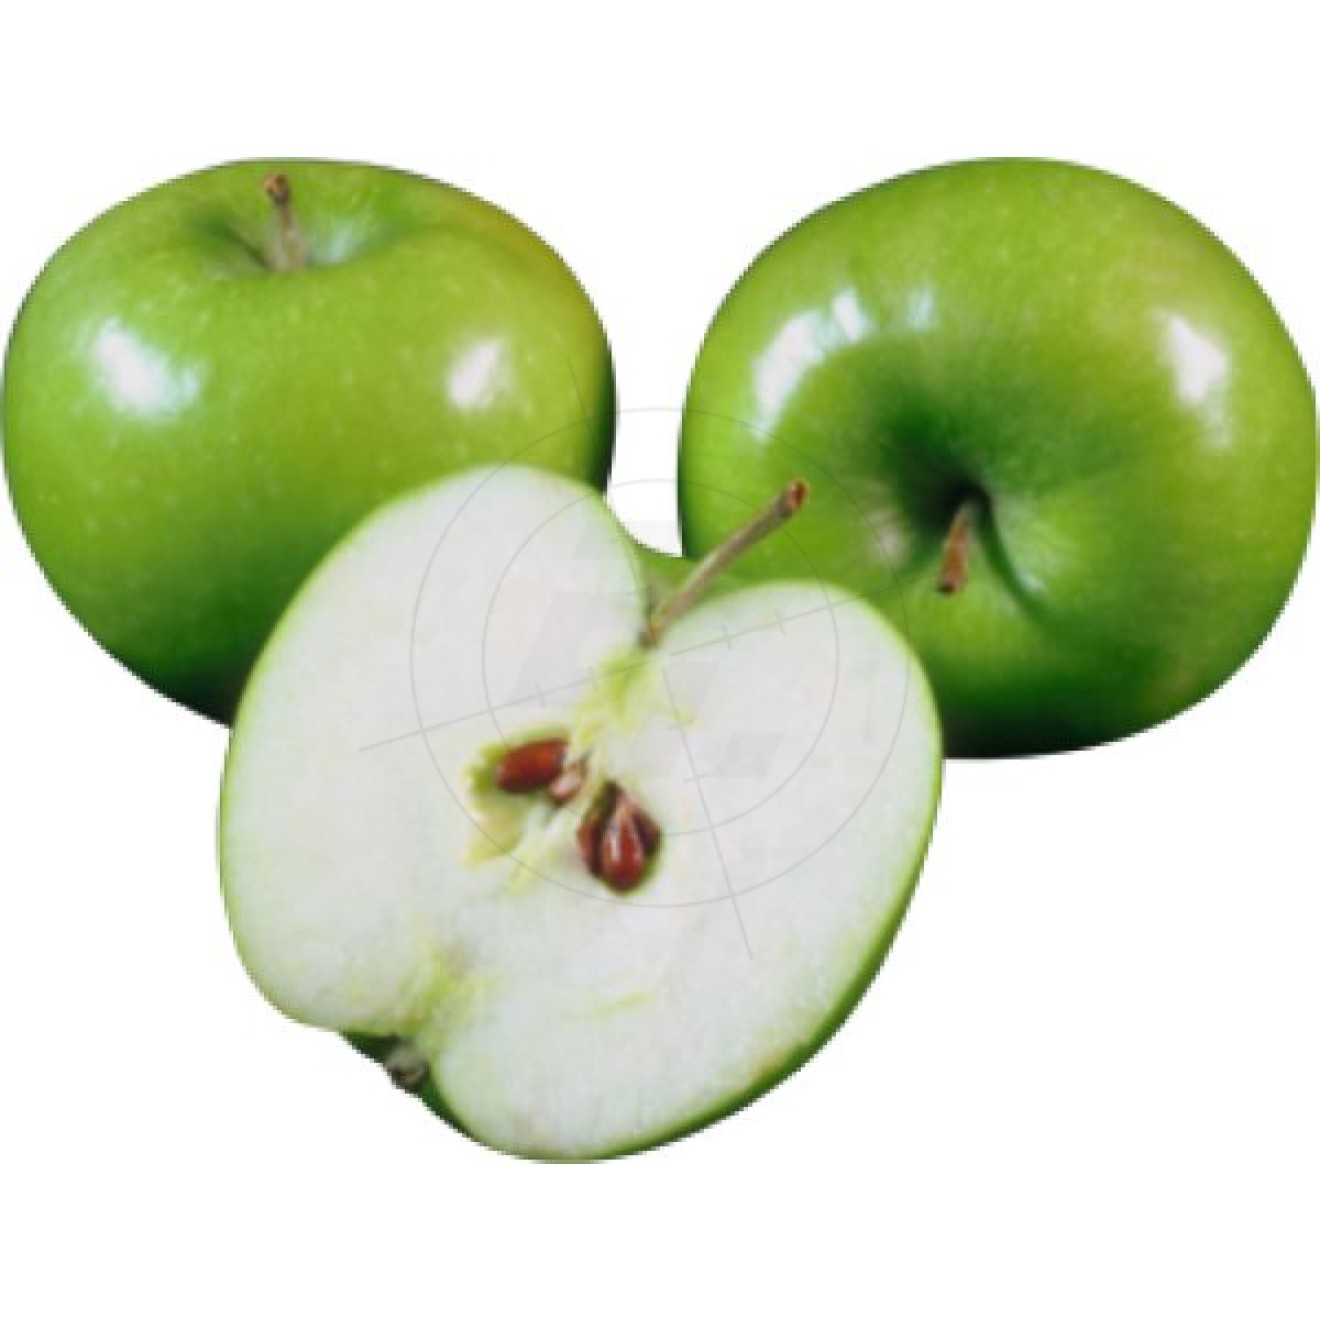 Aufkleber grüne Äpfel, einer halbiert